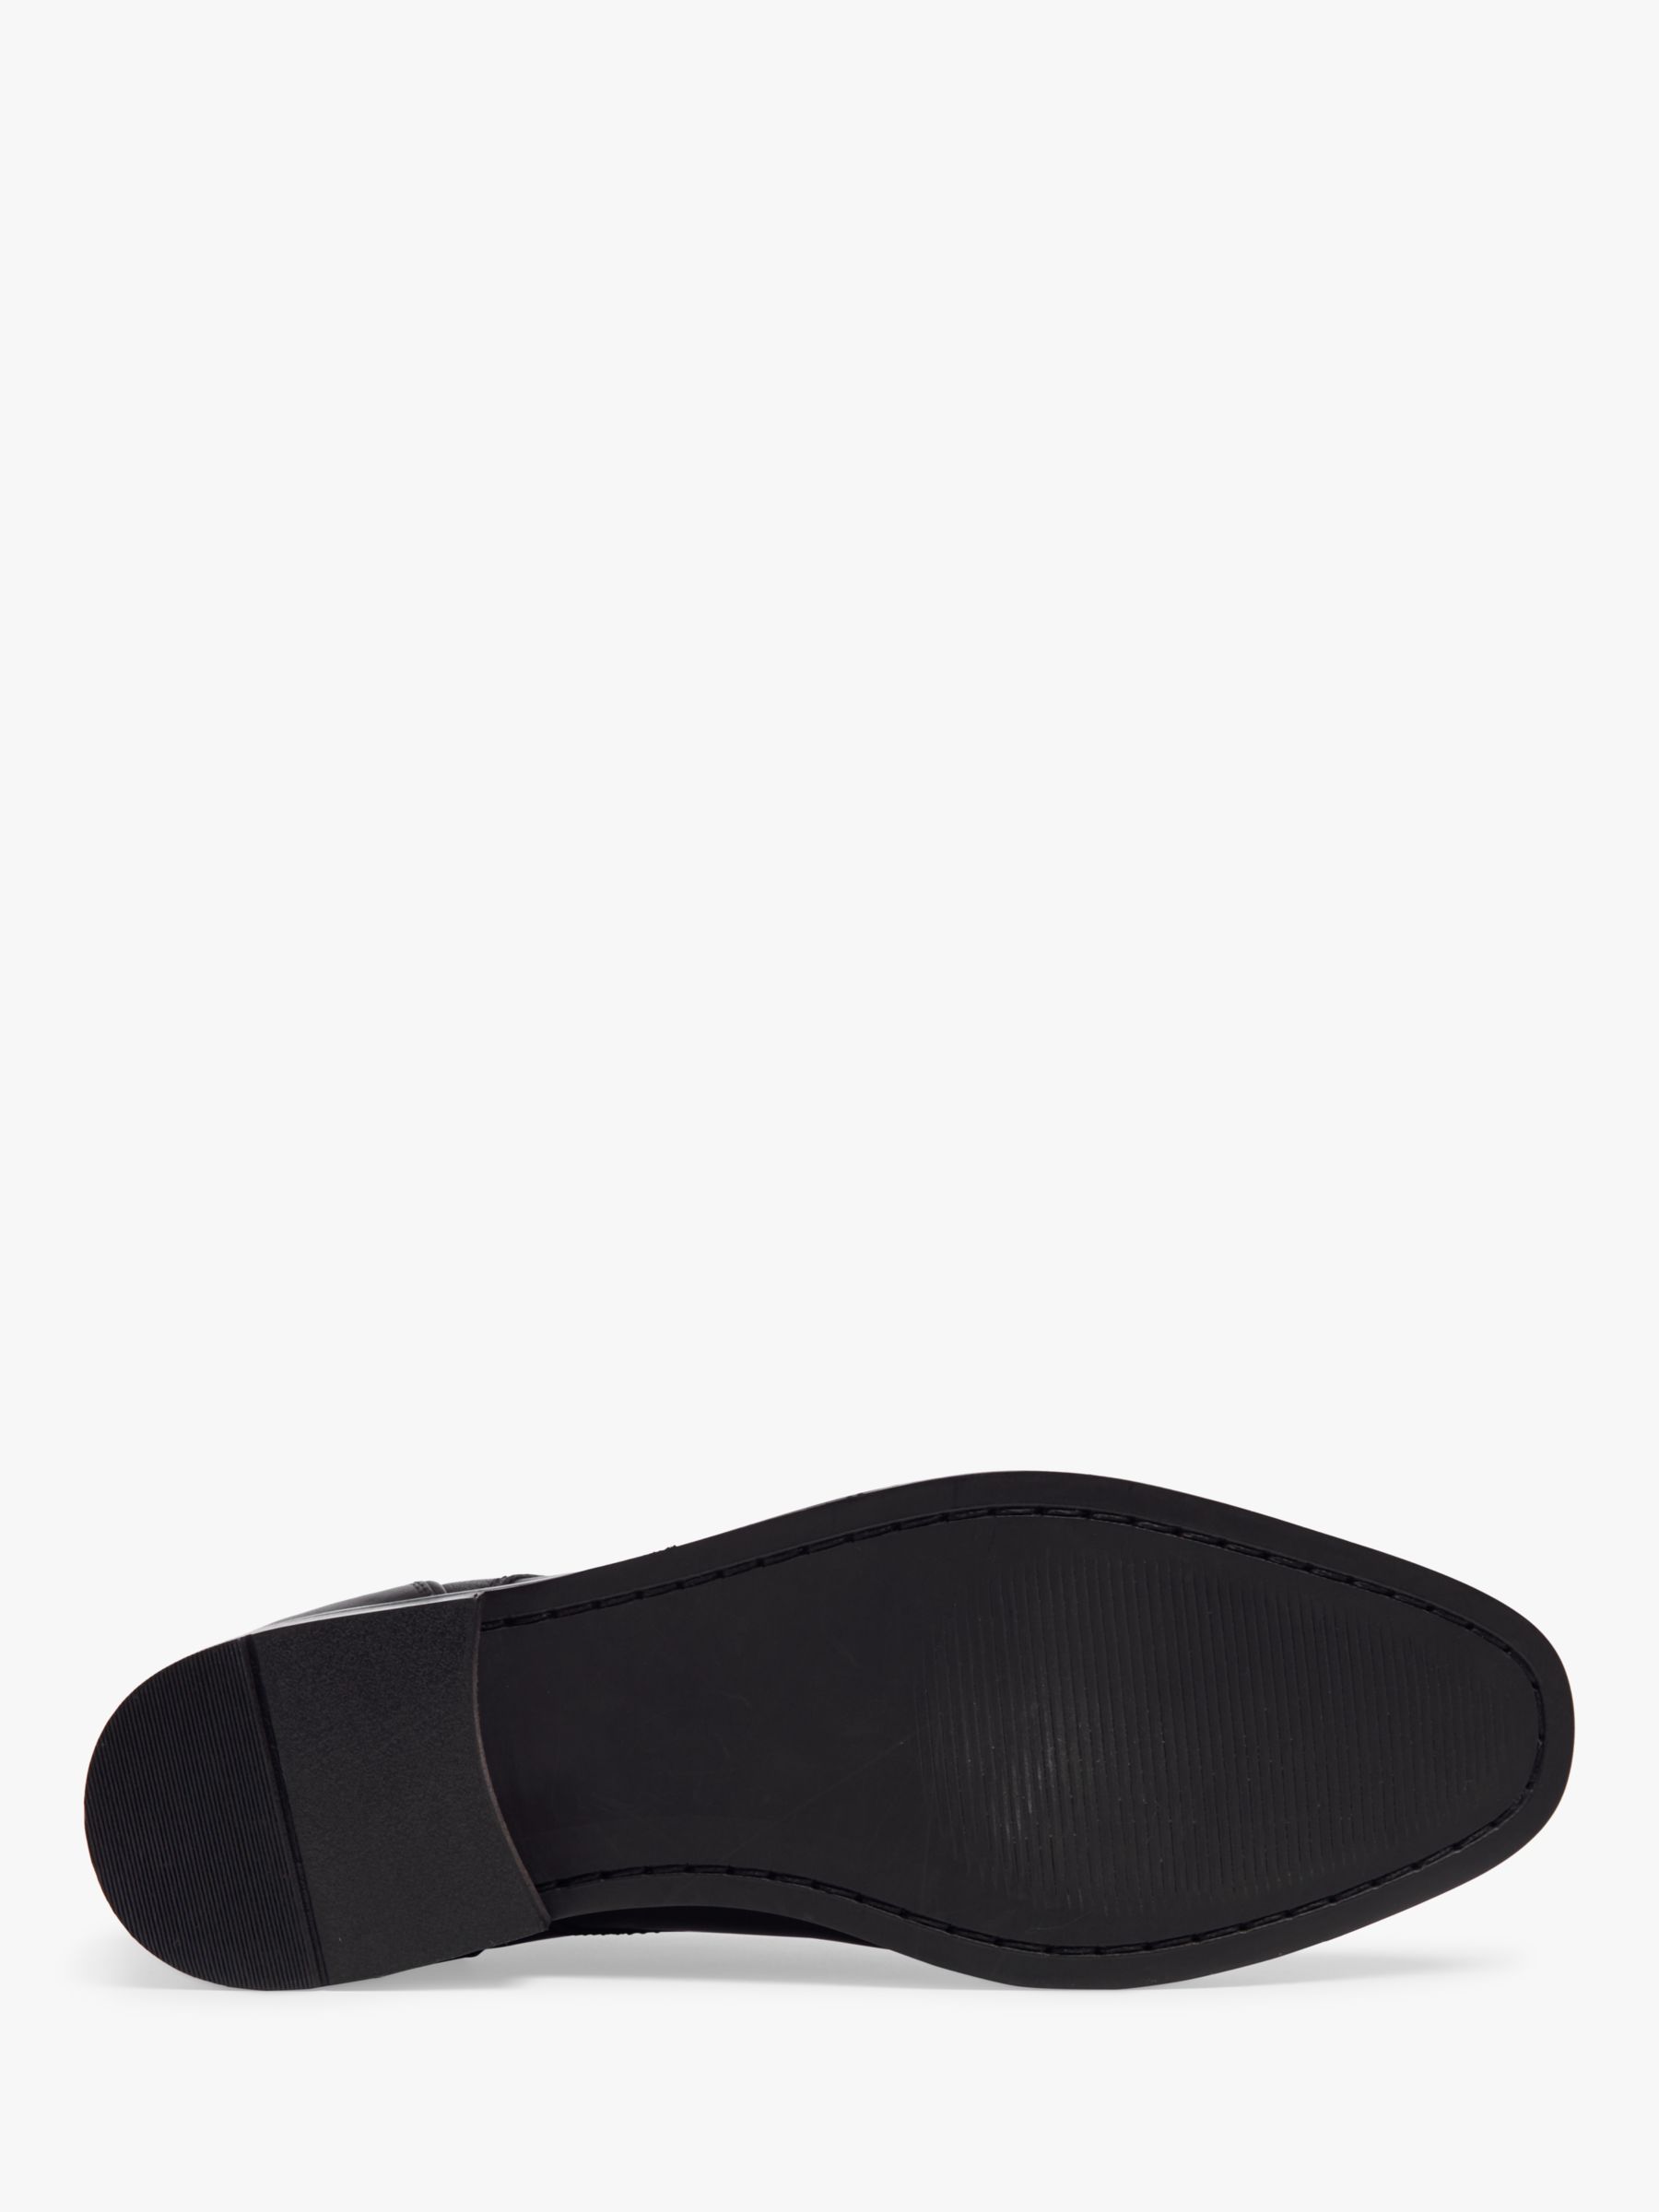 Pod Regus Leather Brogue Detail Shoes, Black at John Lewis & Partners